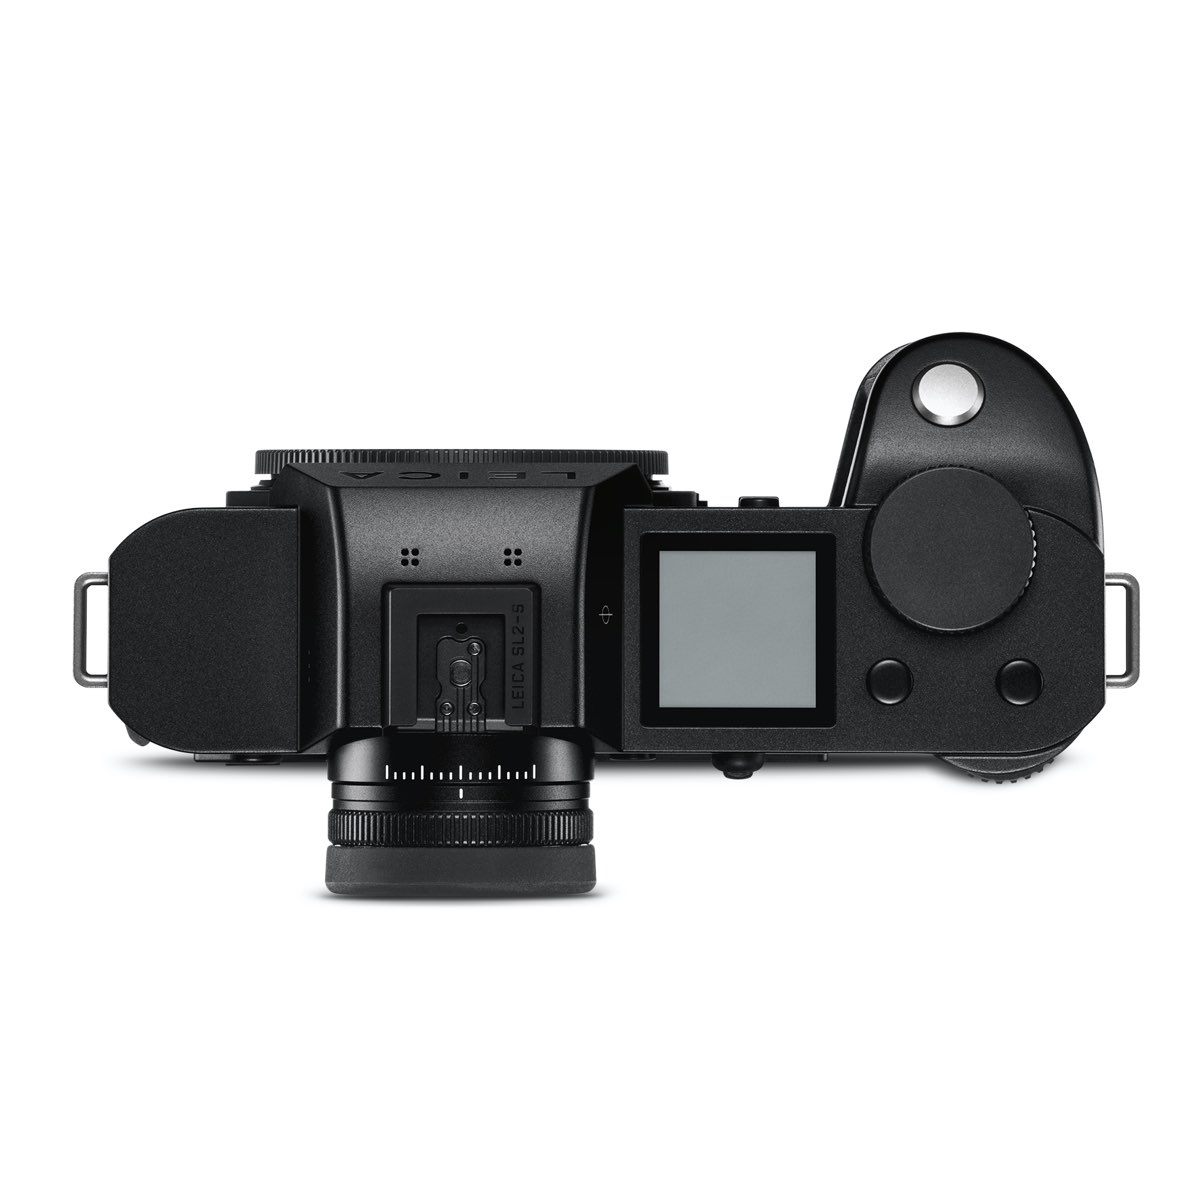 Leica SL2-S (Body)